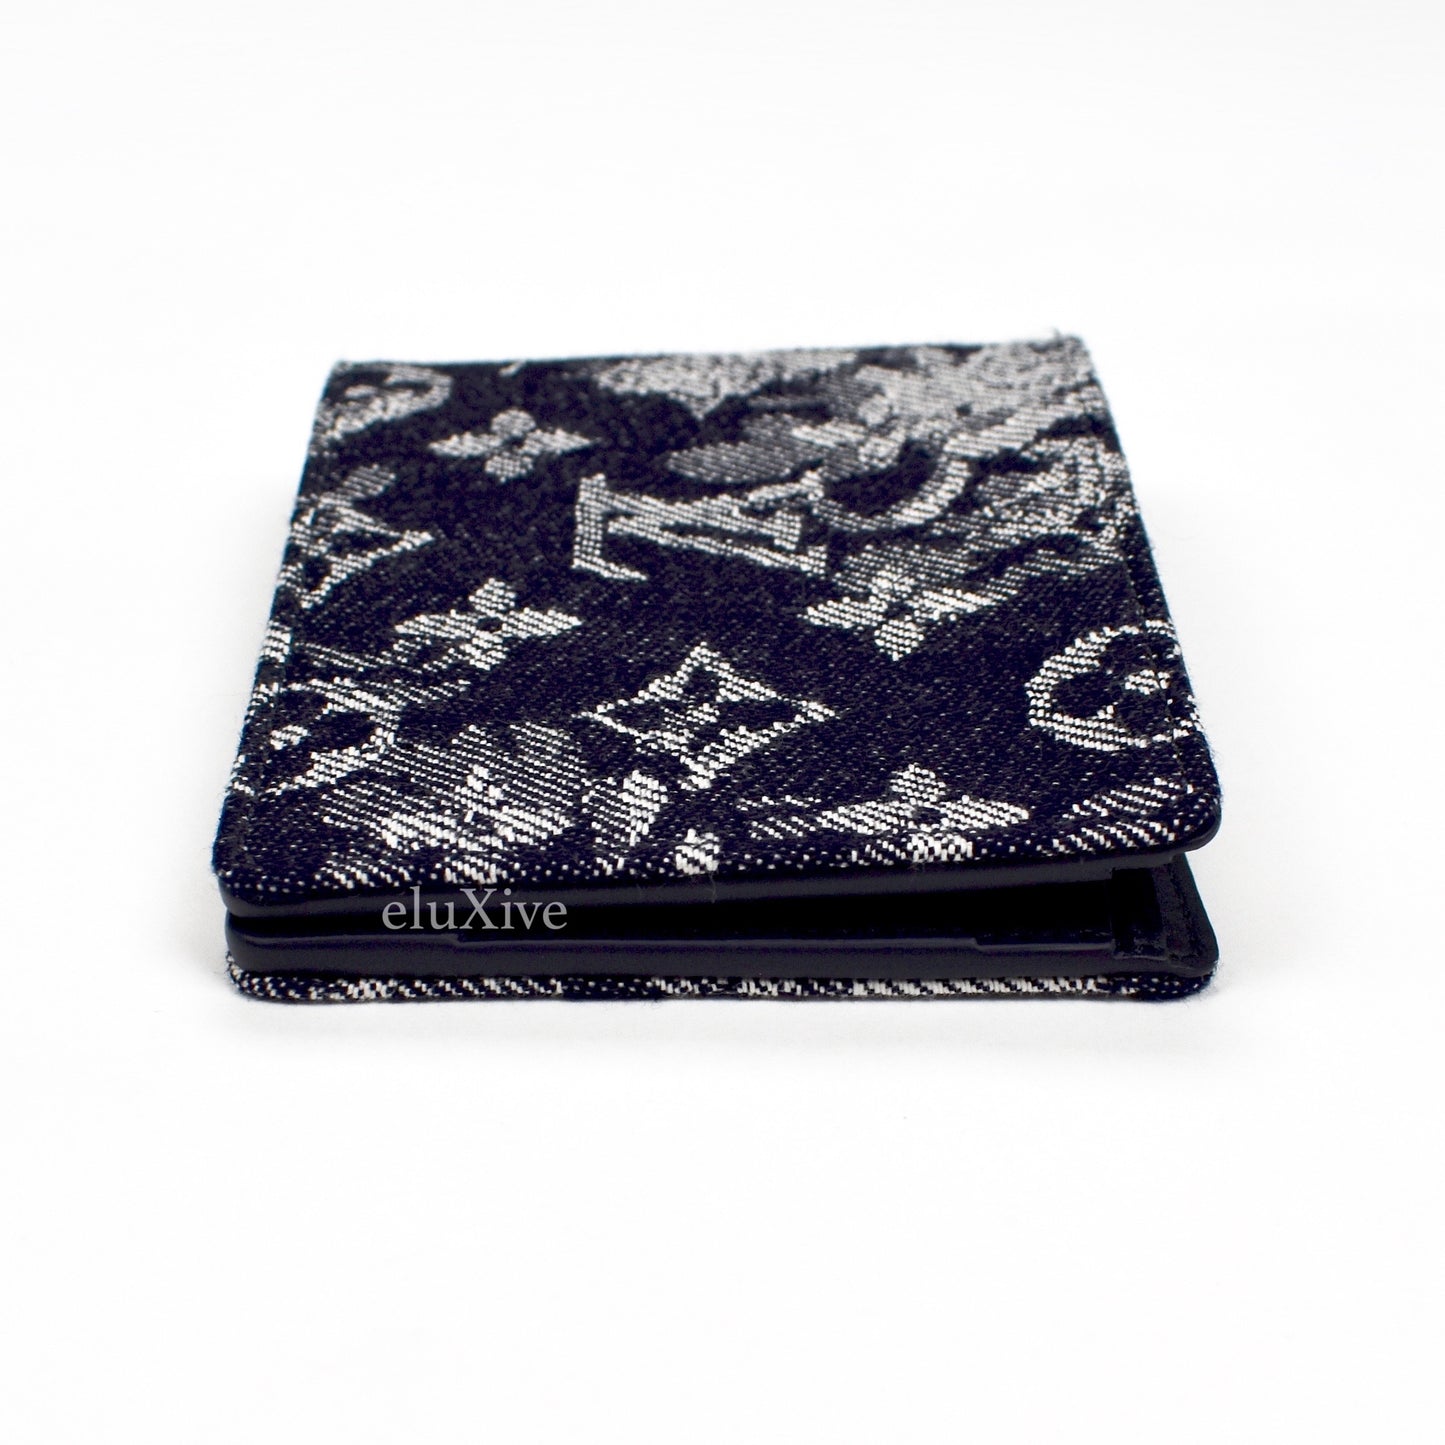 Louis Vuitton - Monogram Tapestry Woven Multiple Wallet